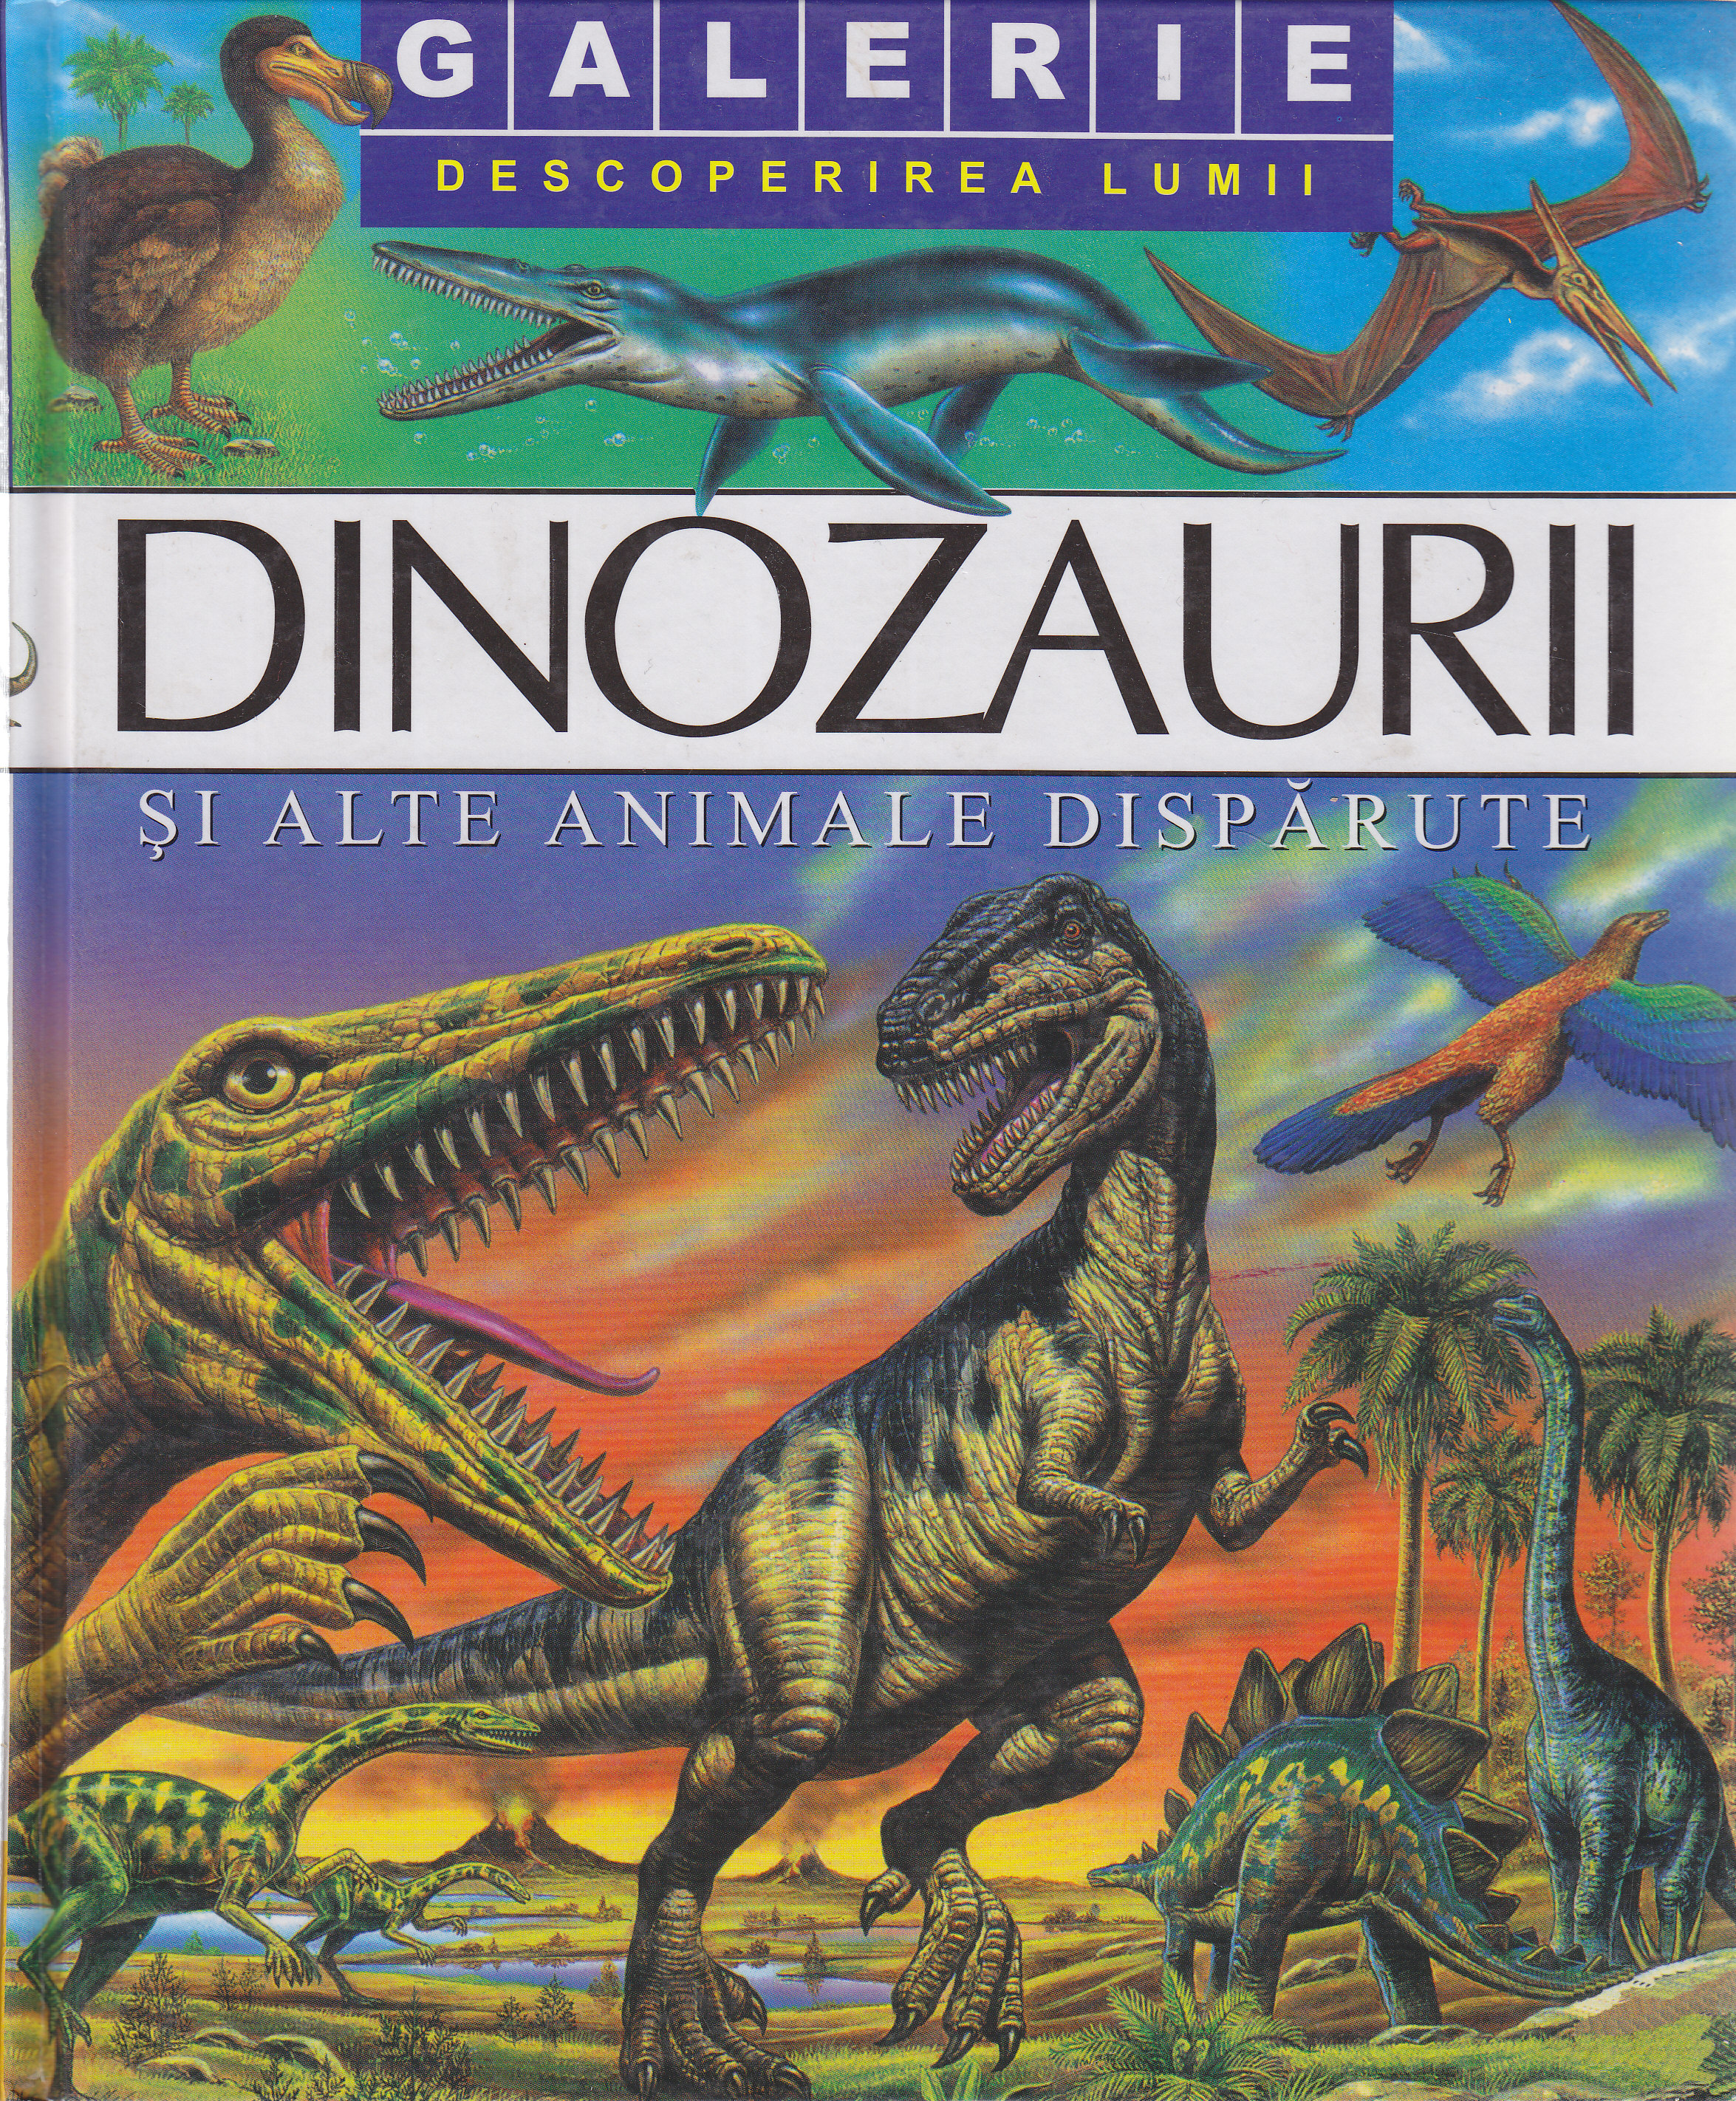 Dinozaurii - Galerie descoperirea lumii